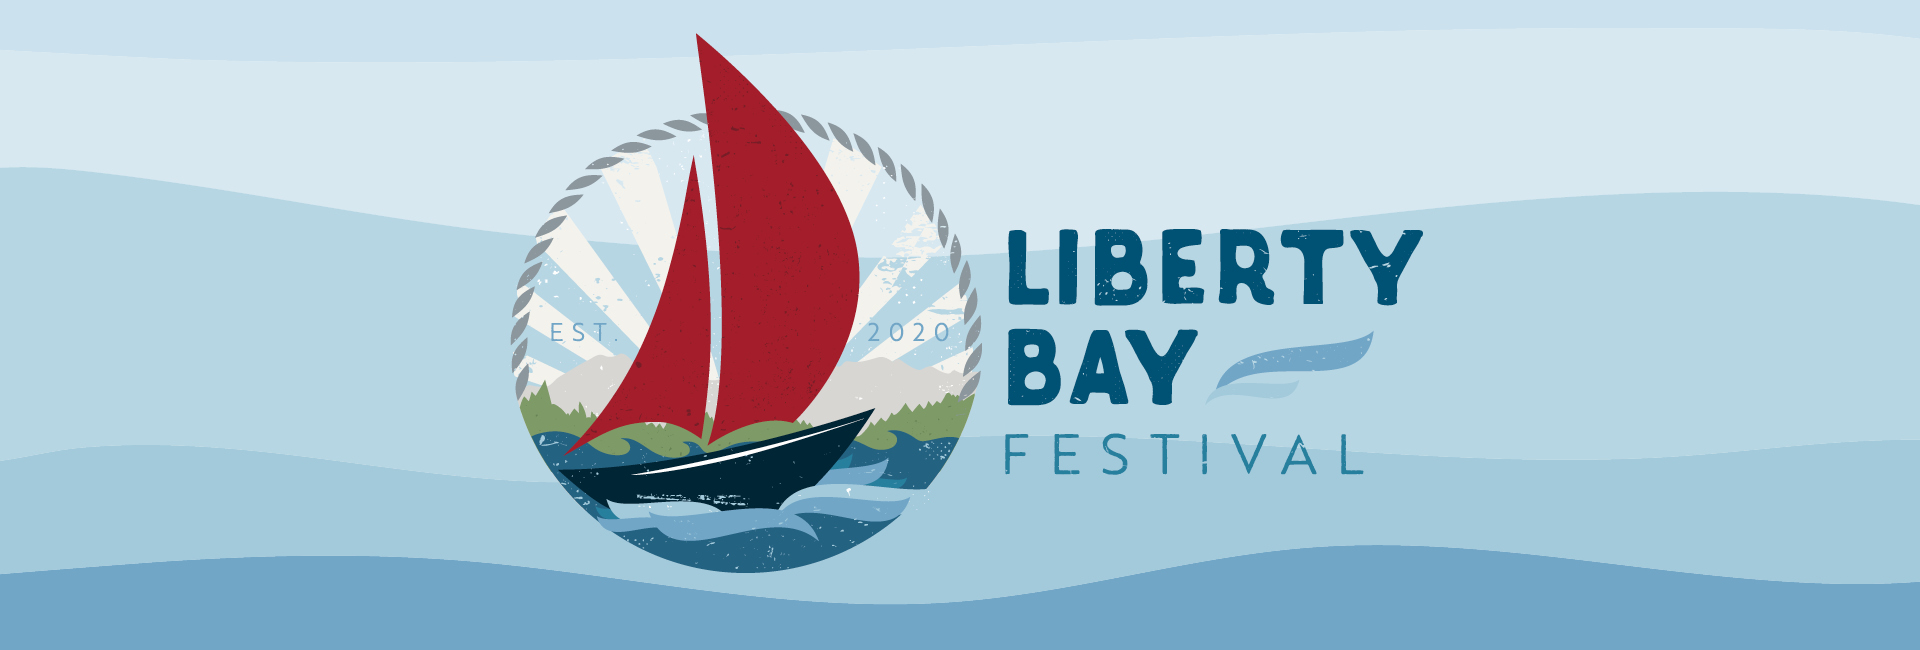 Liberty Bay Festival